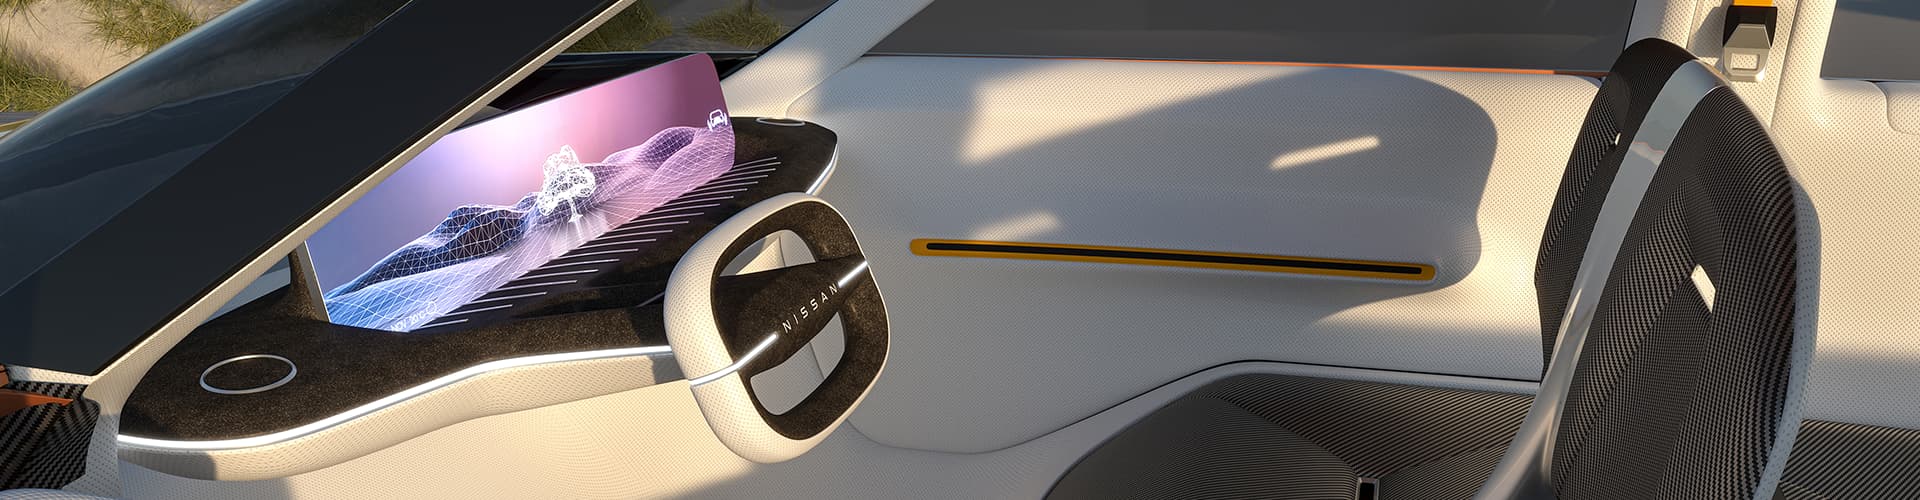 Nissan EVs 2030 modern interior